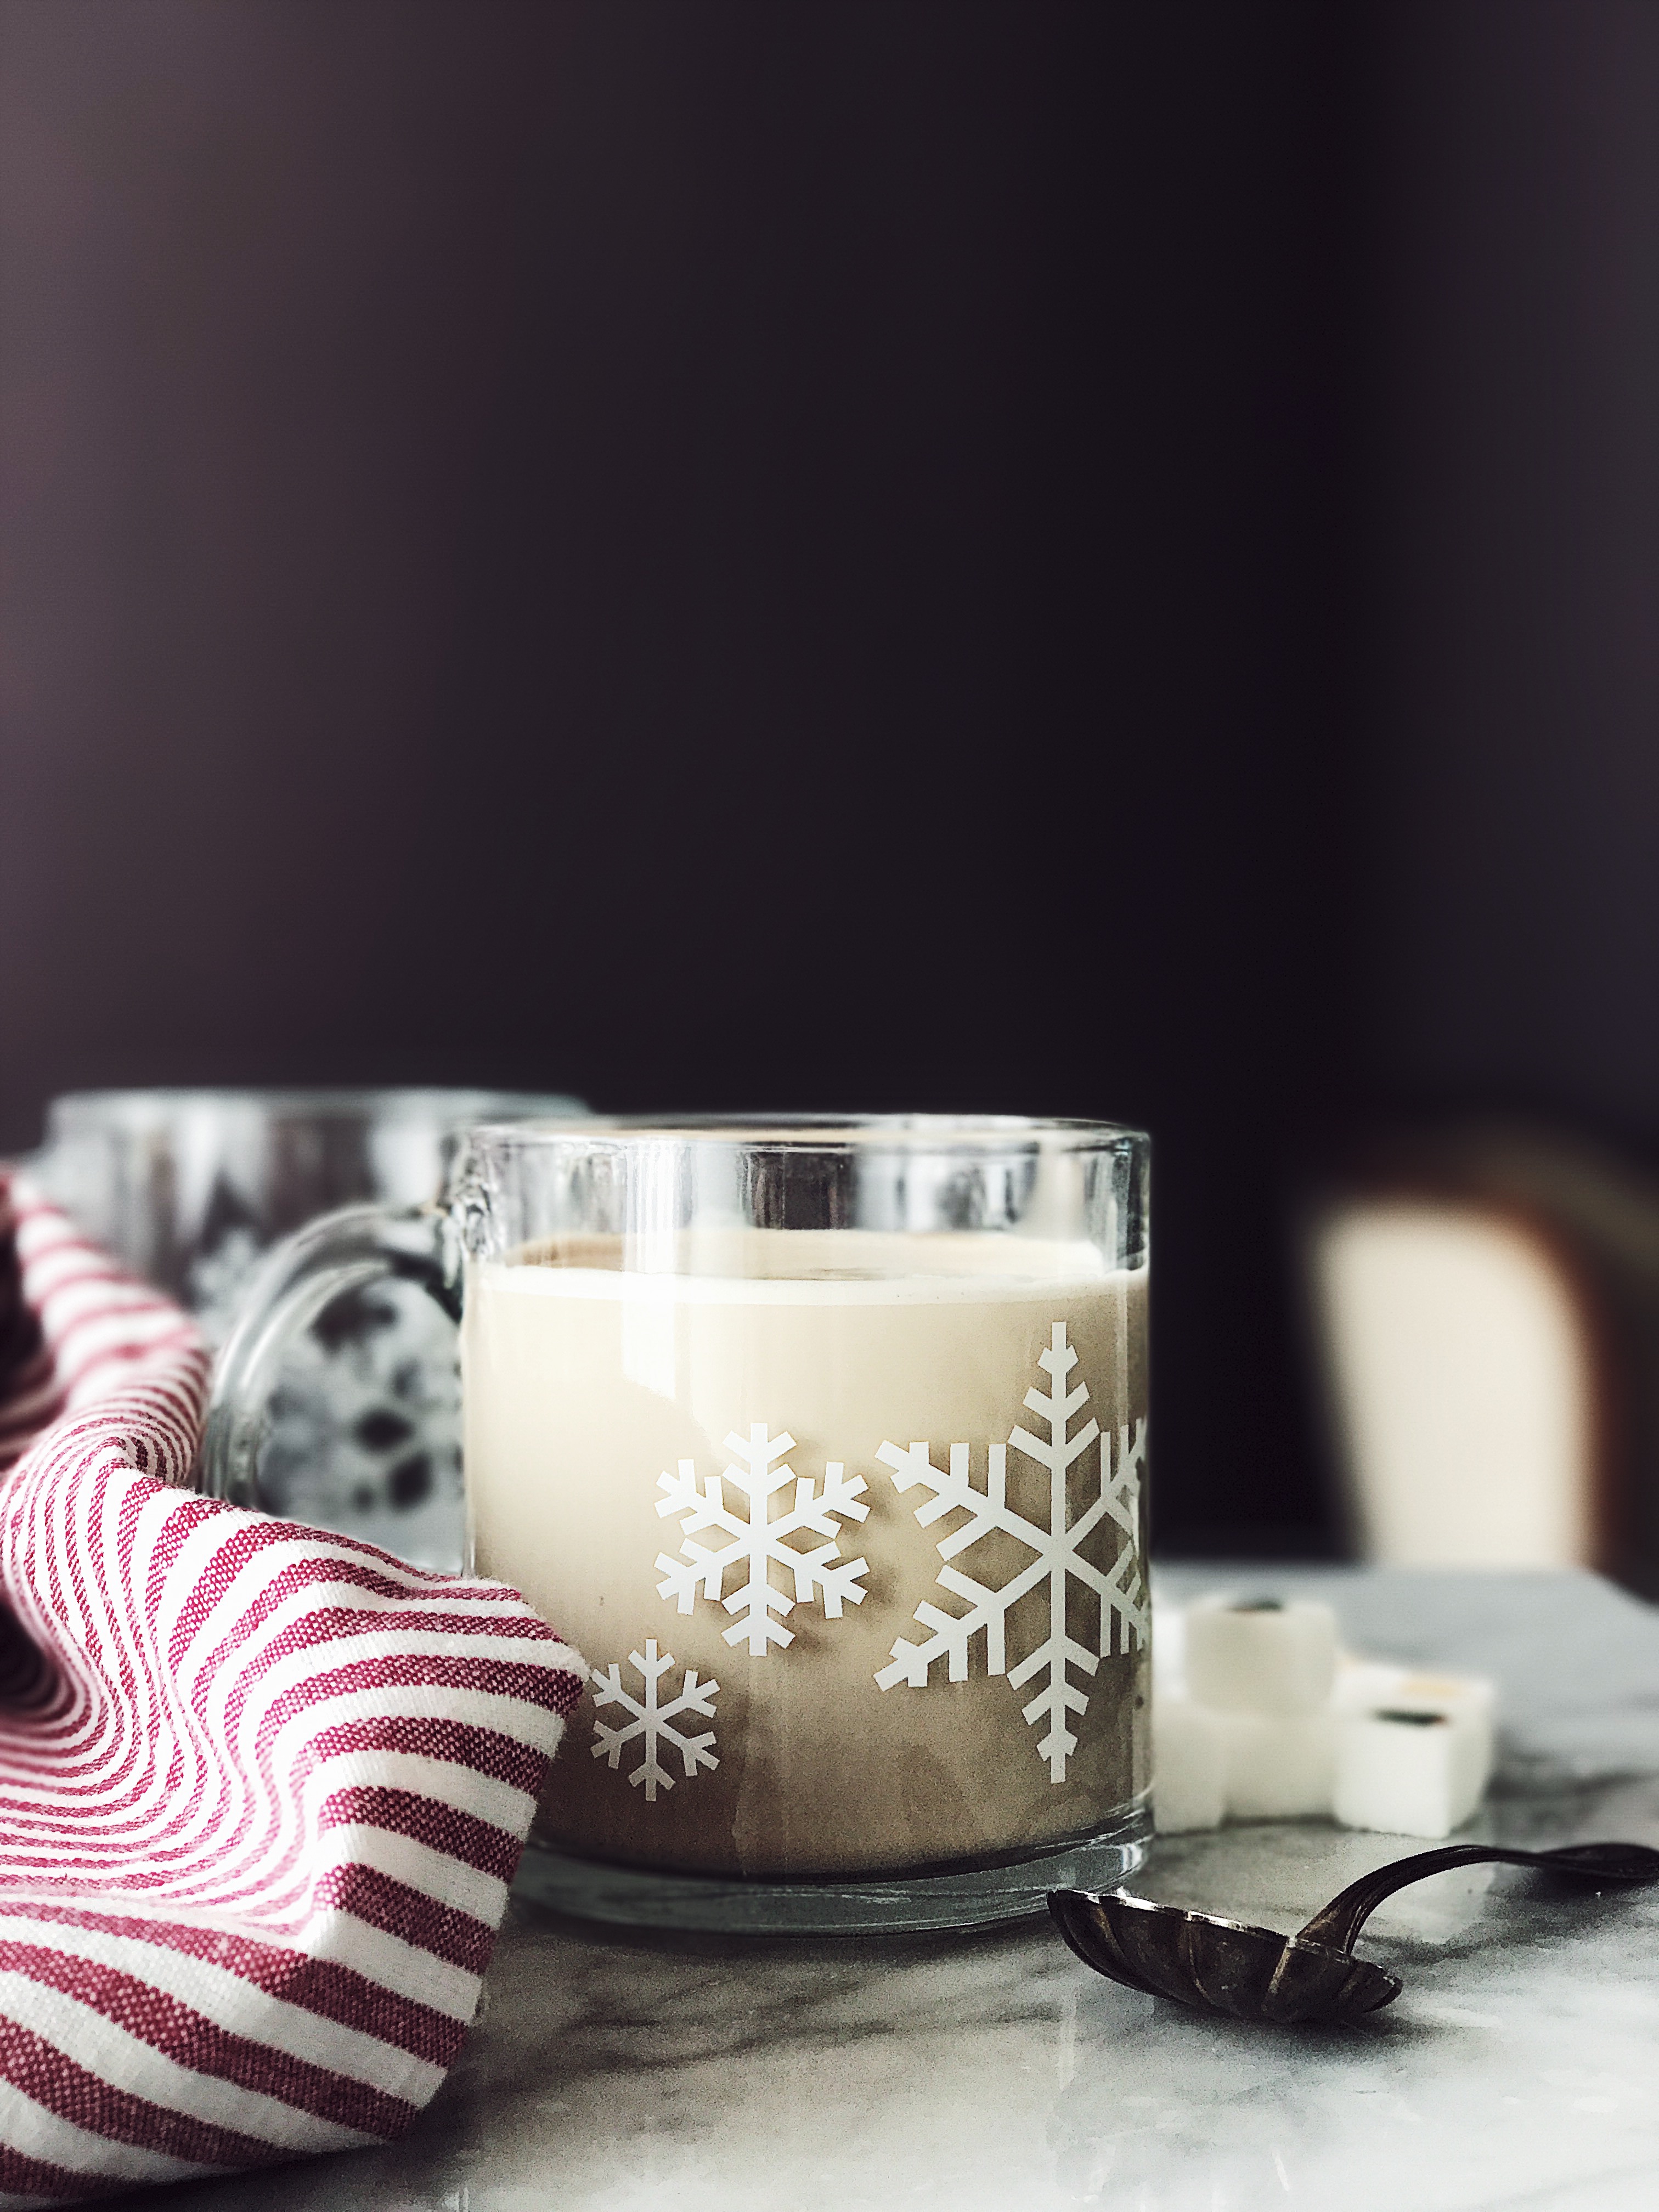 latte macchiato recipe served in a glass cup with snowflakes decor